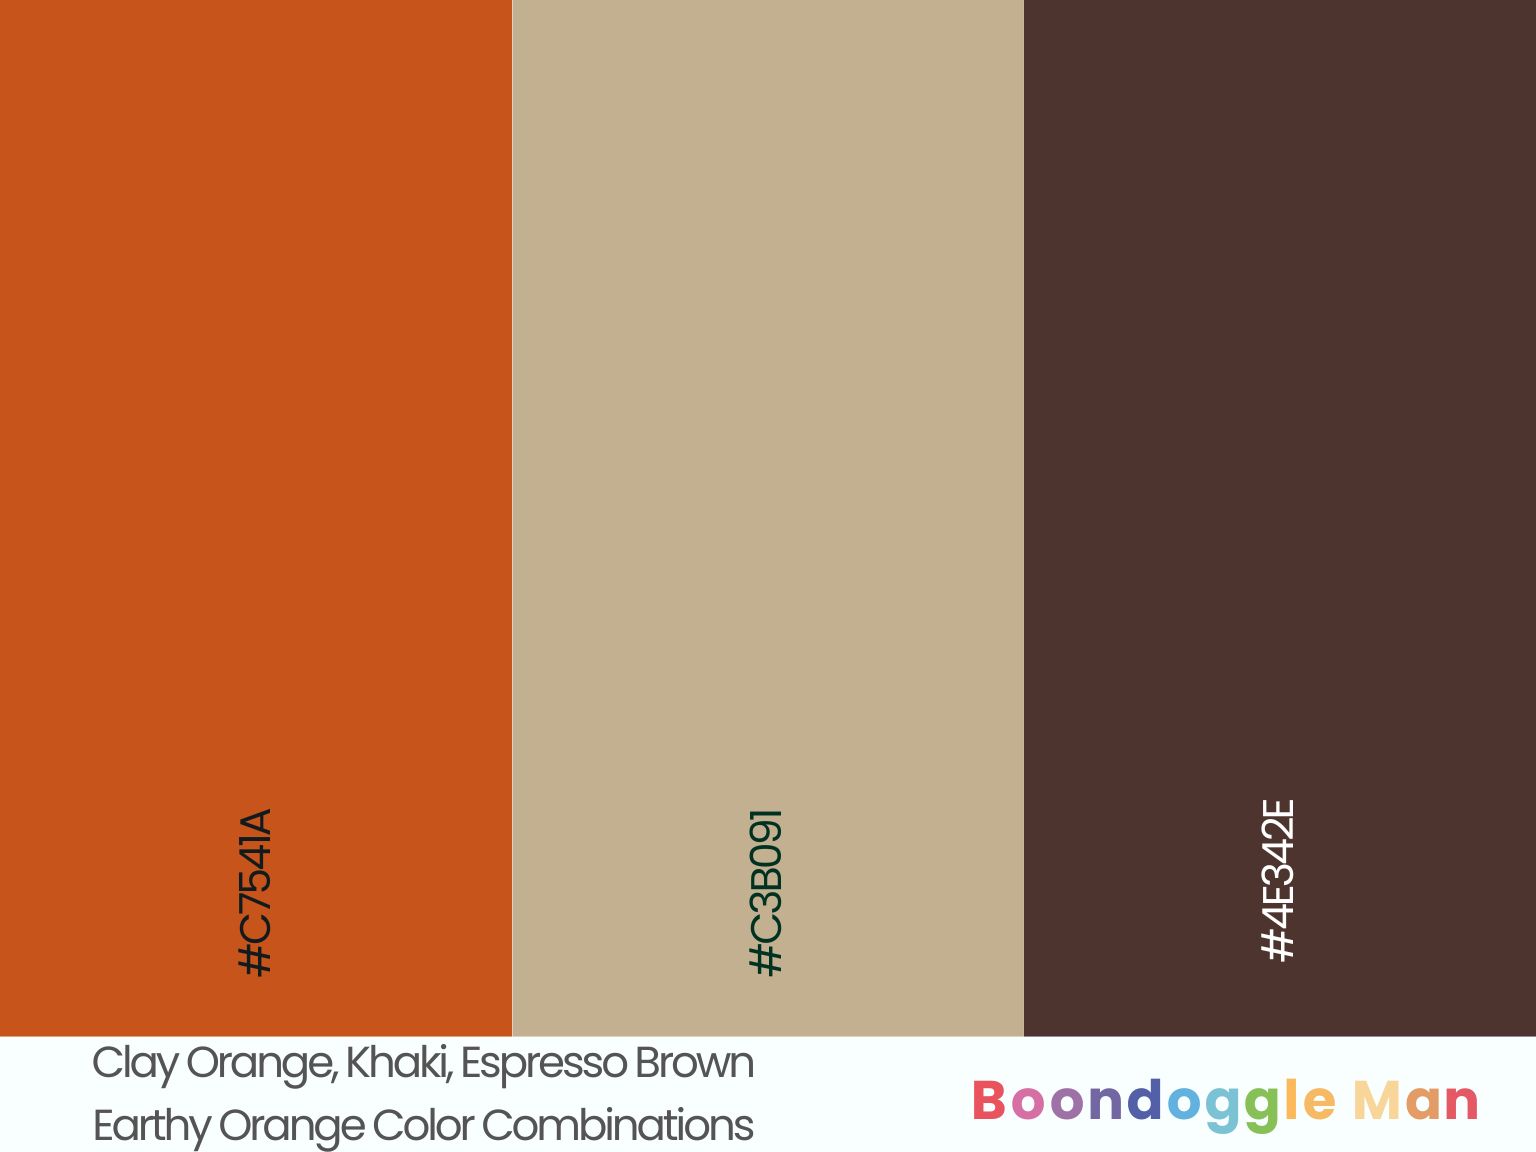 Clay Orange, Khaki, Espresso Brown